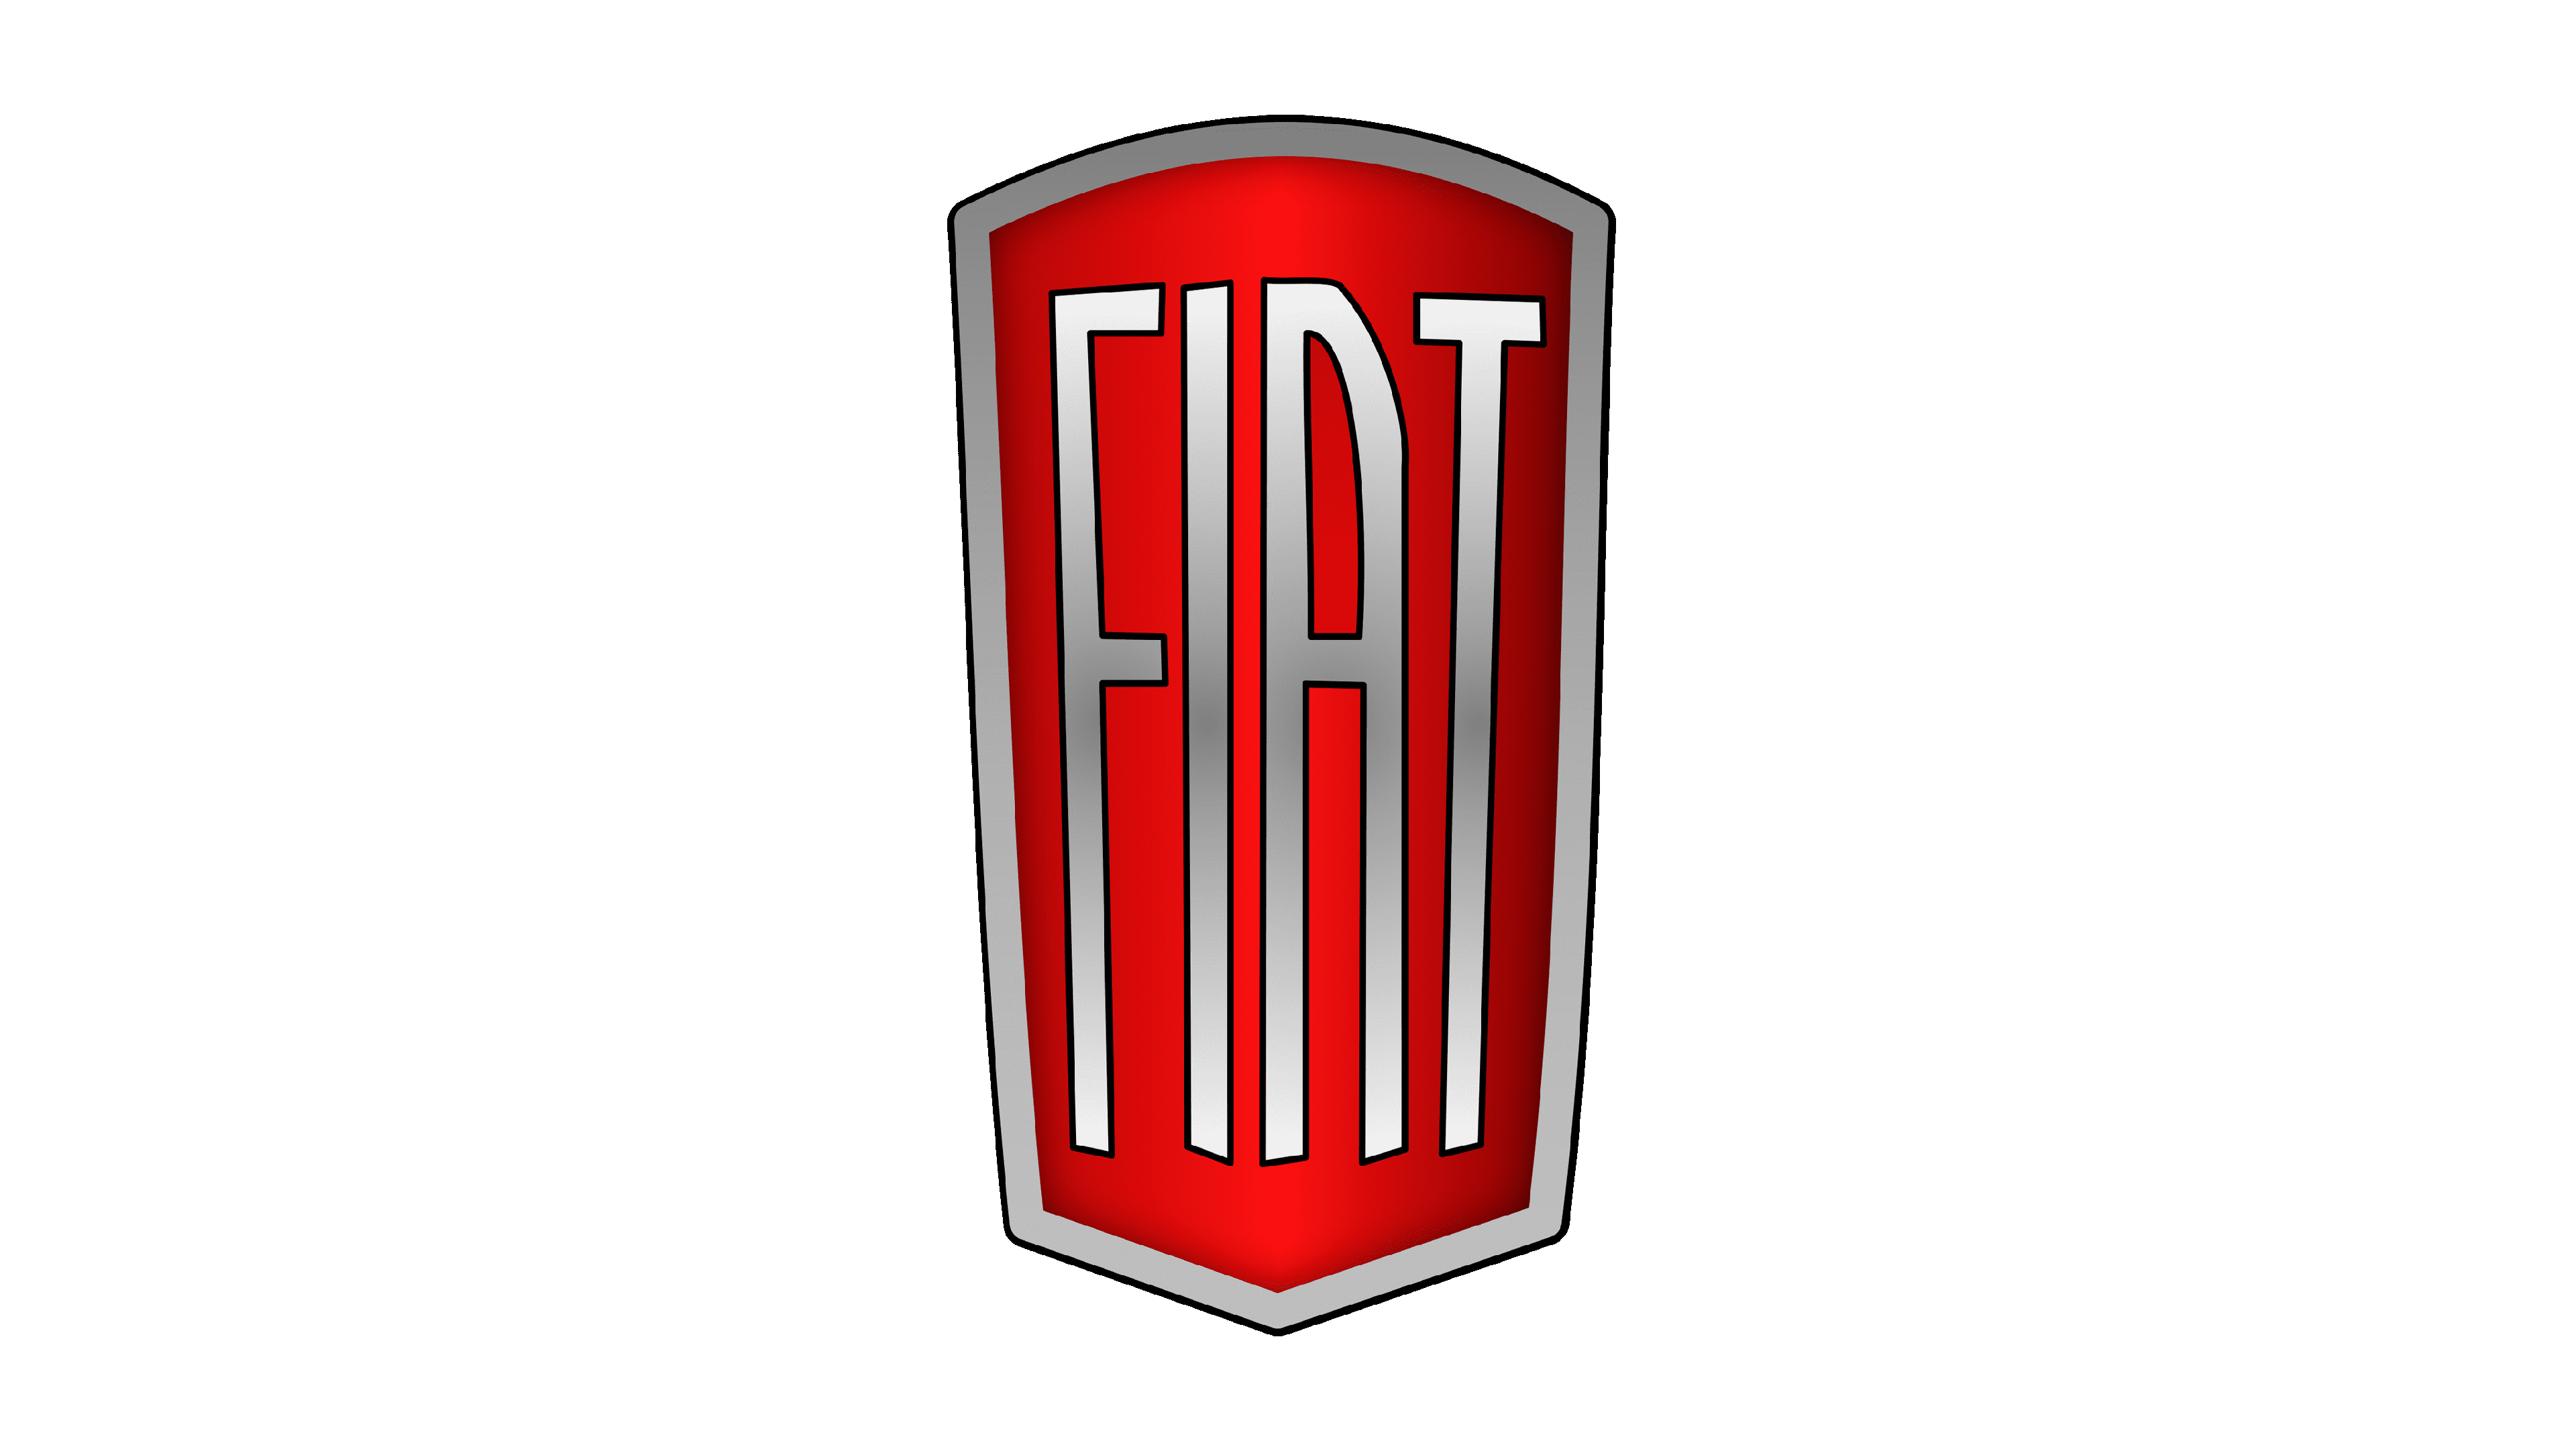 File:FIAT logo (2020).svg - Wikipedia